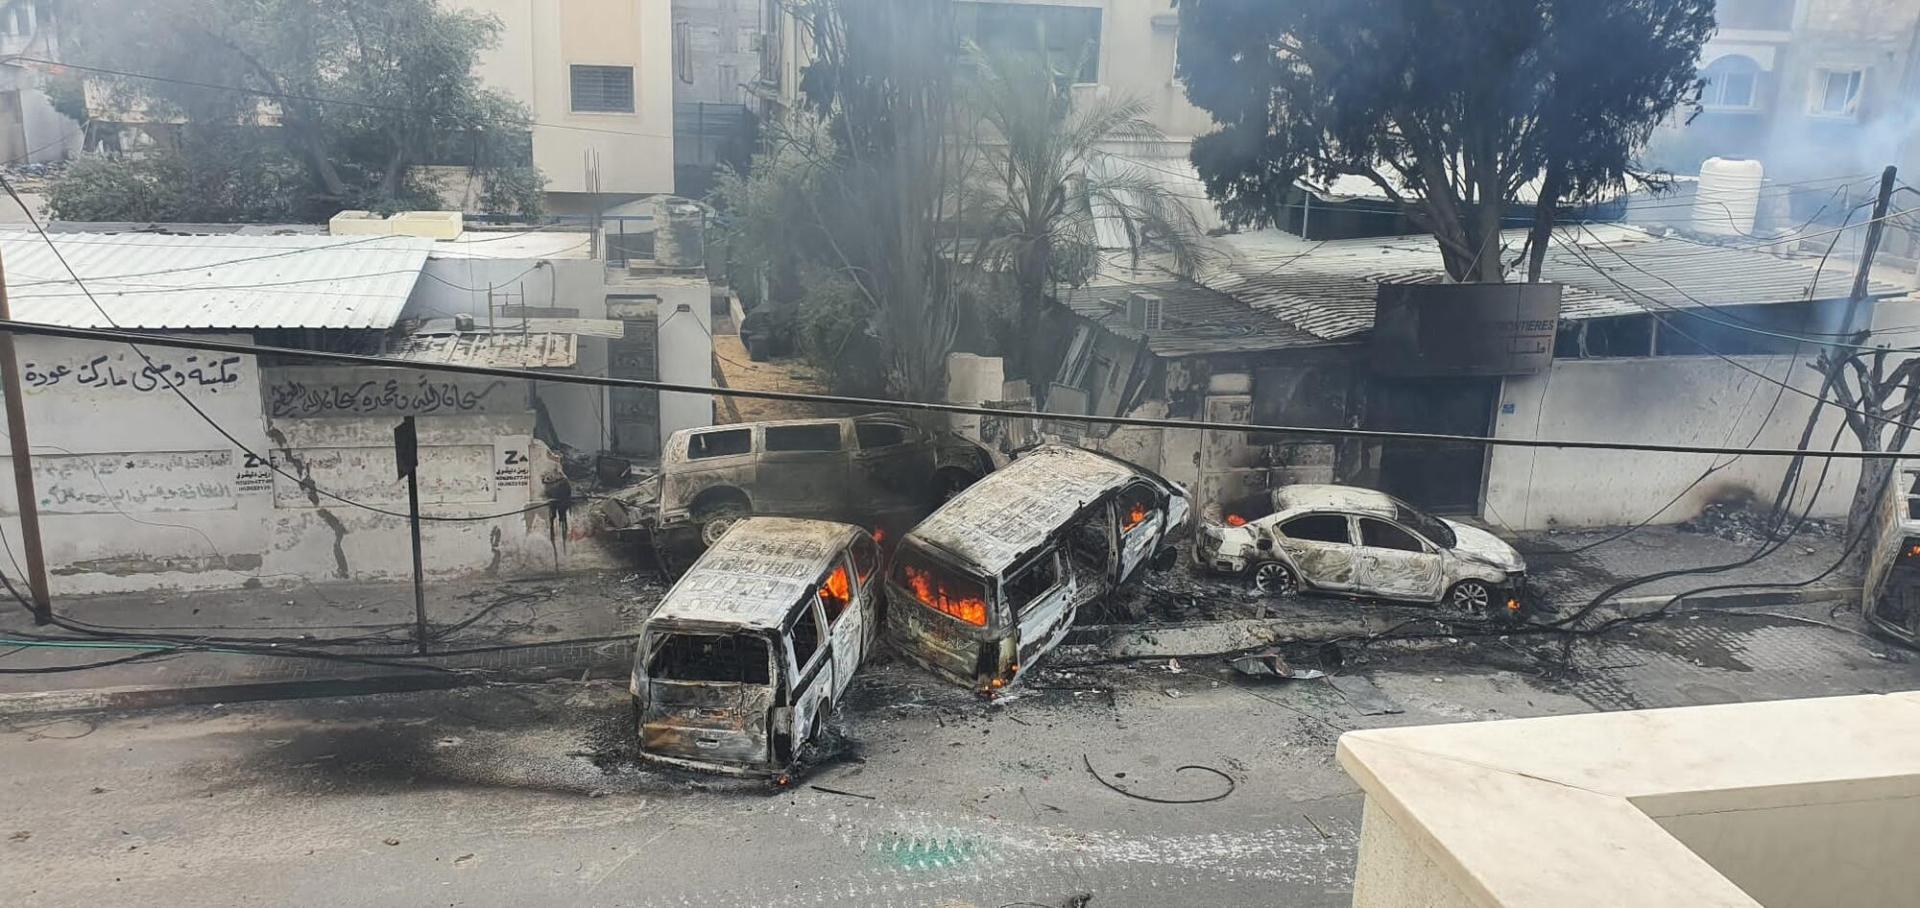 MSF convoy attacked in Gaza